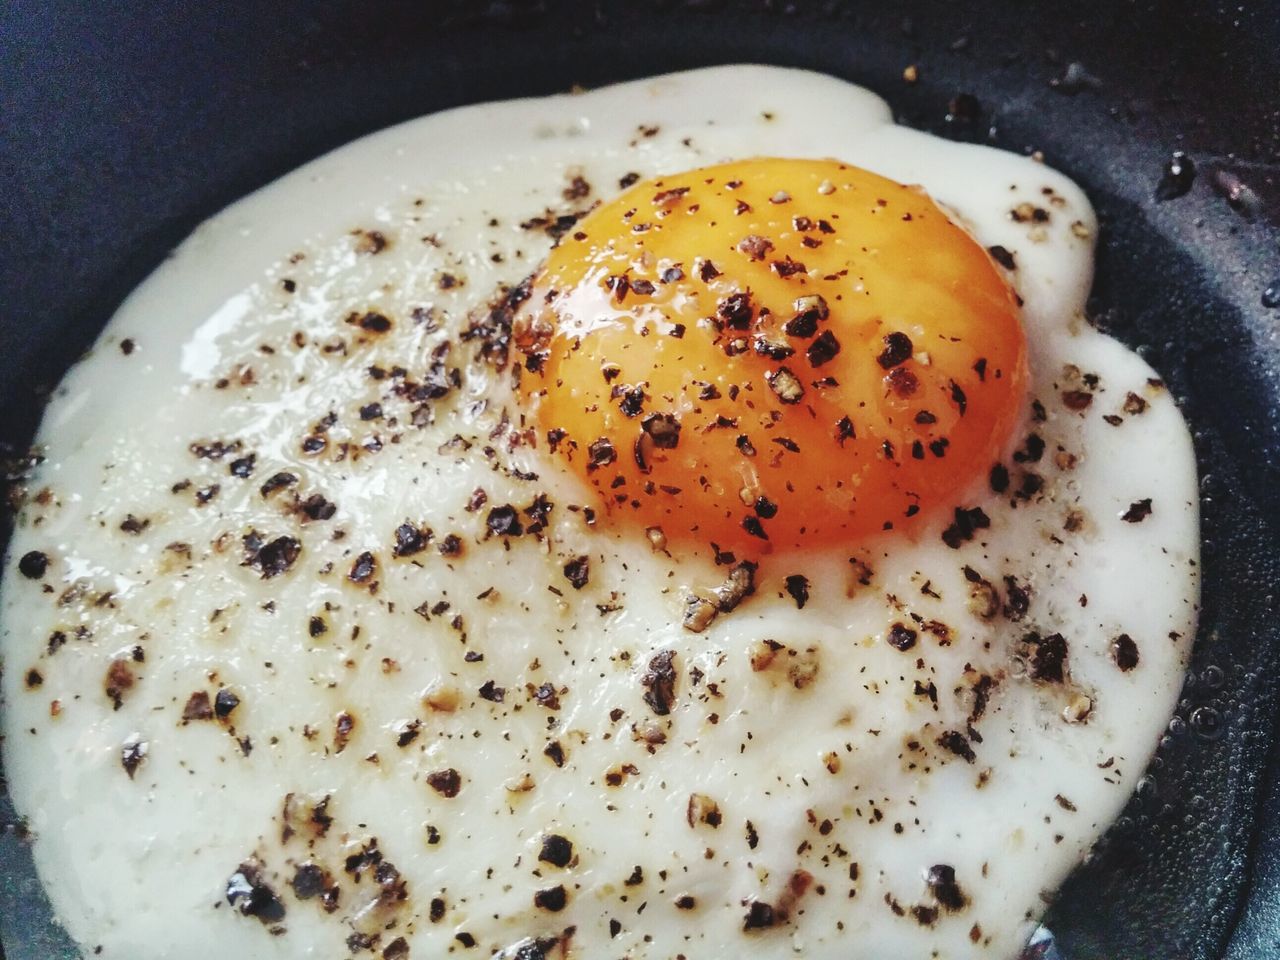 Egg = life